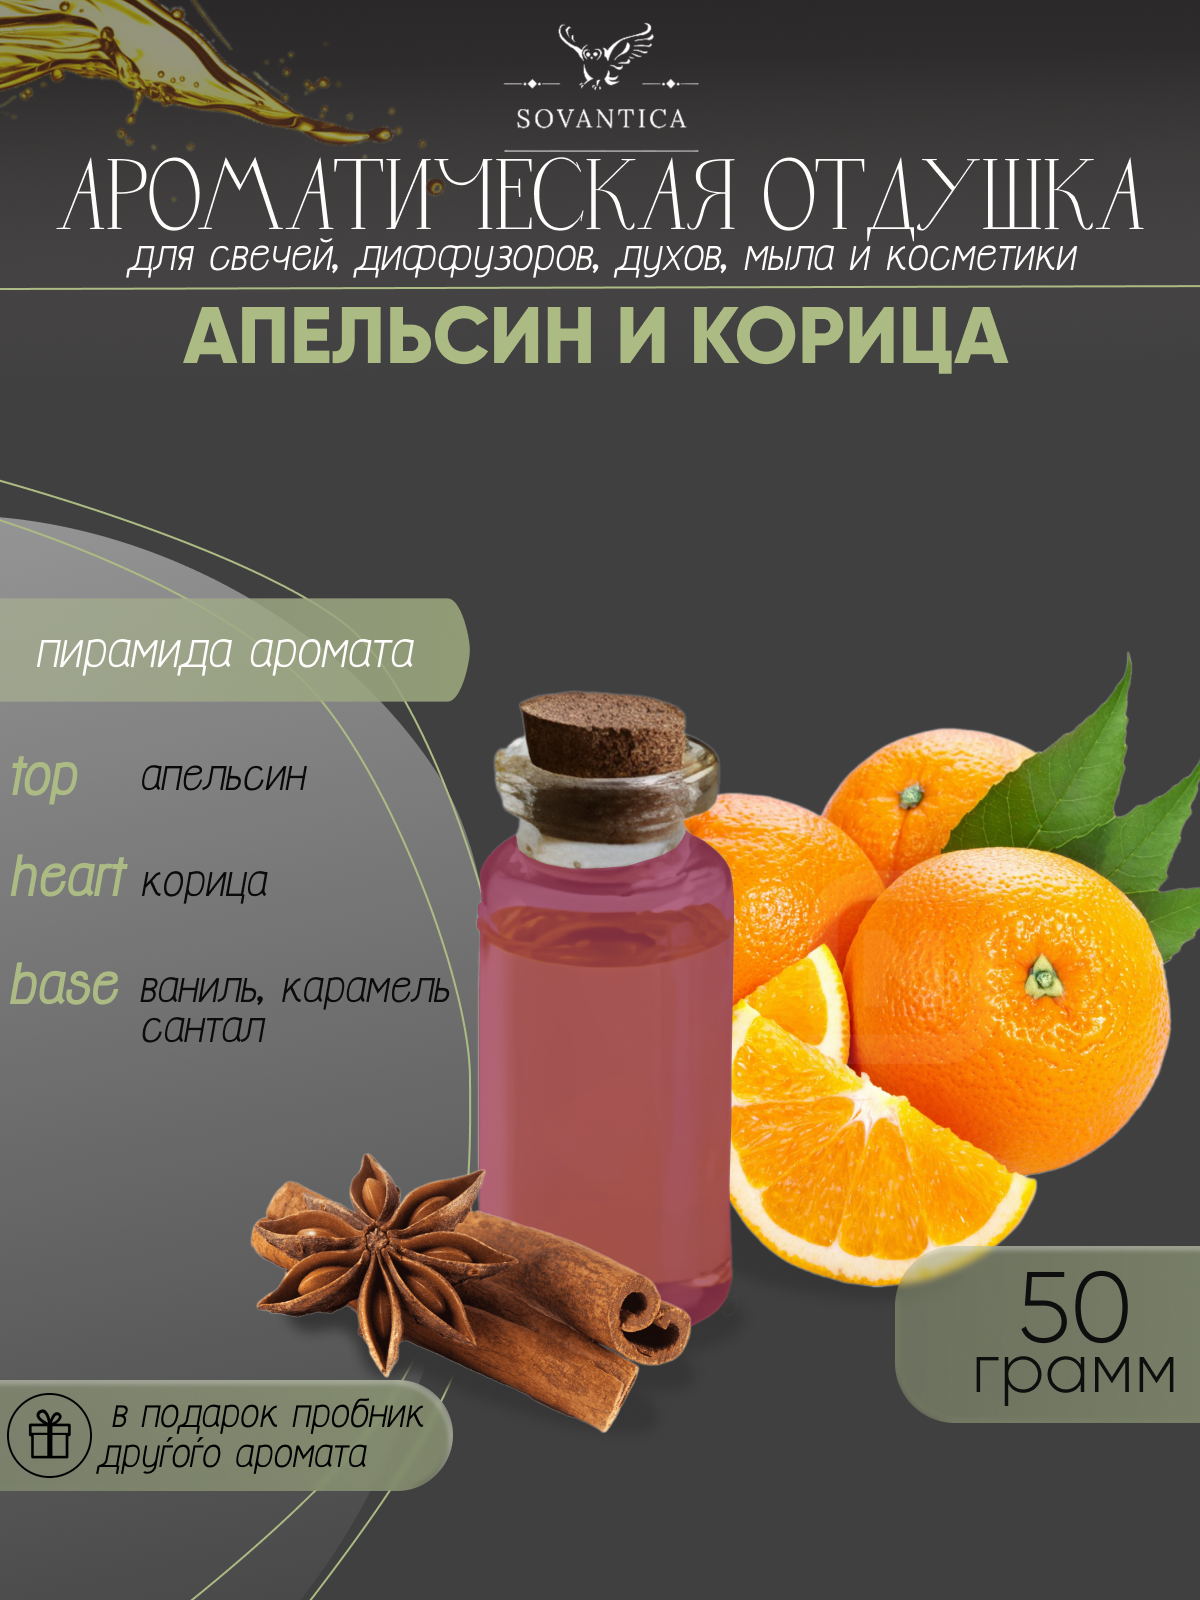 Ароматическая отдушка Апельсин и корица 50гр